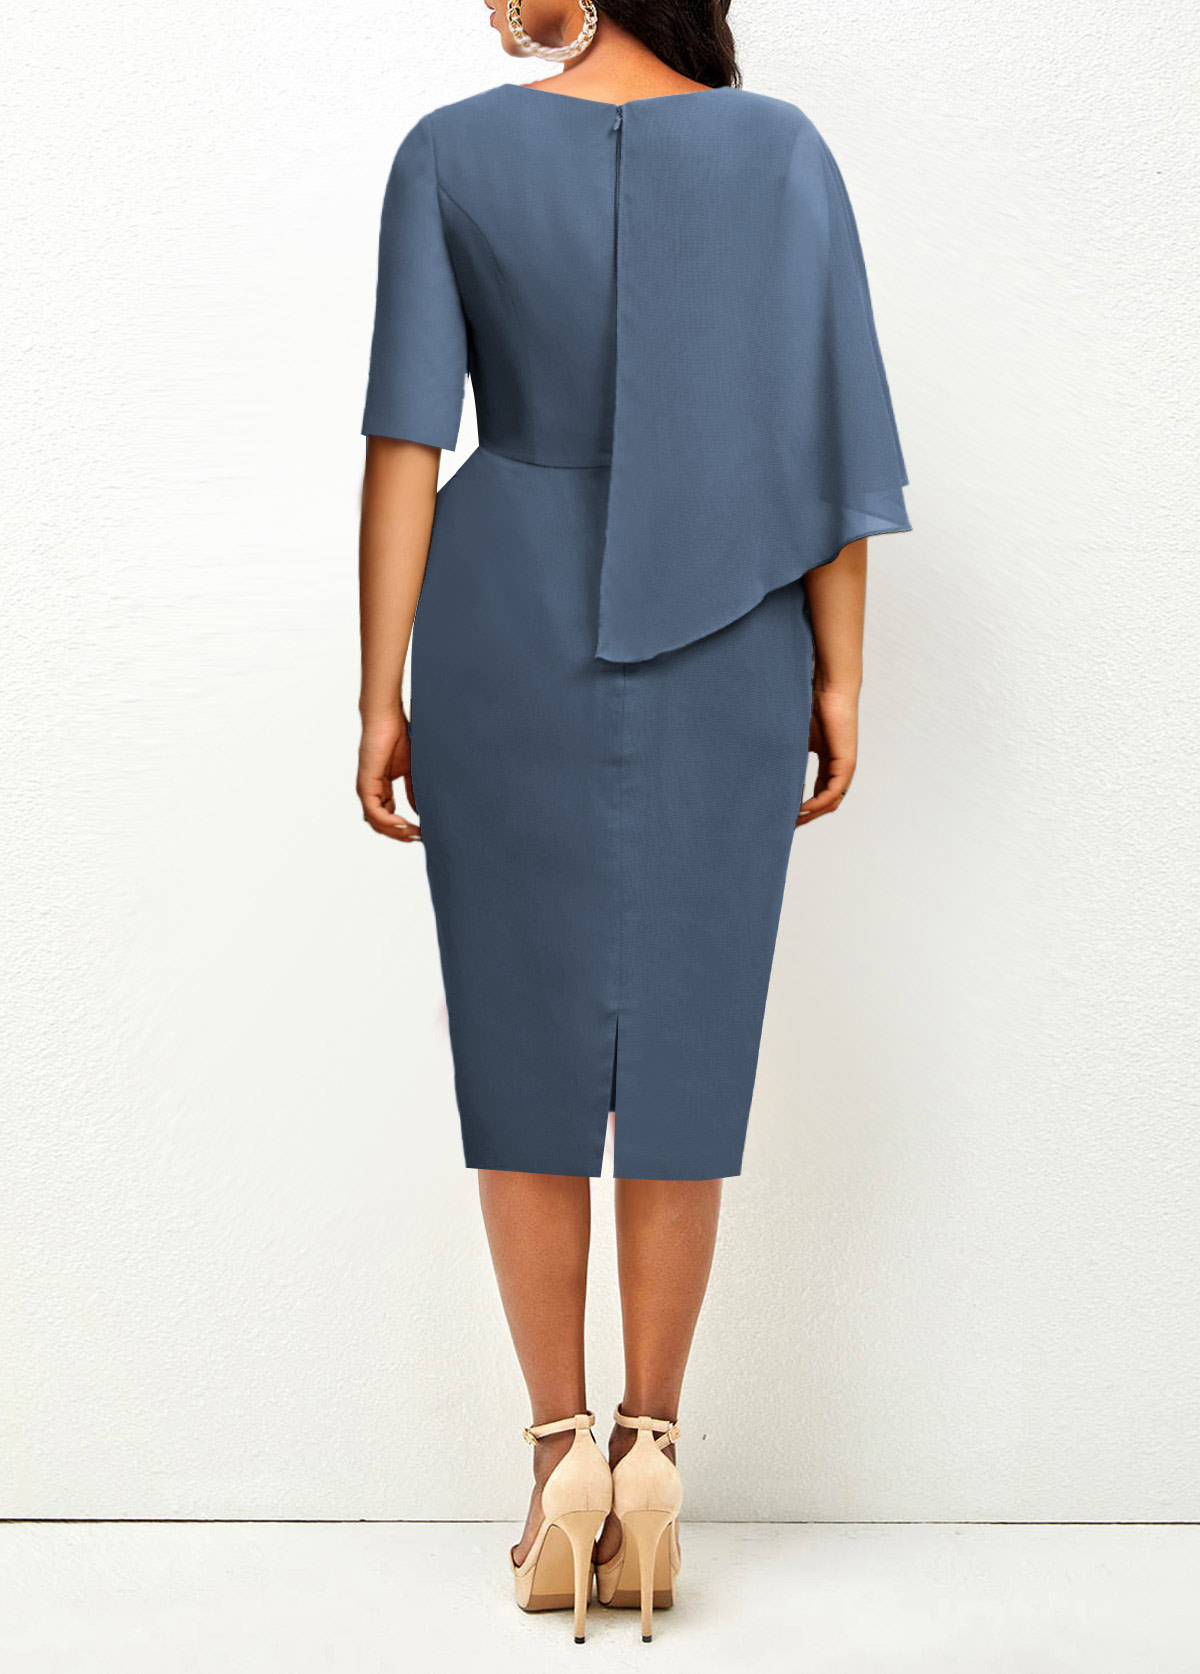 Dusty Blue Asymmetry Half Sleeve Bodycon Dress